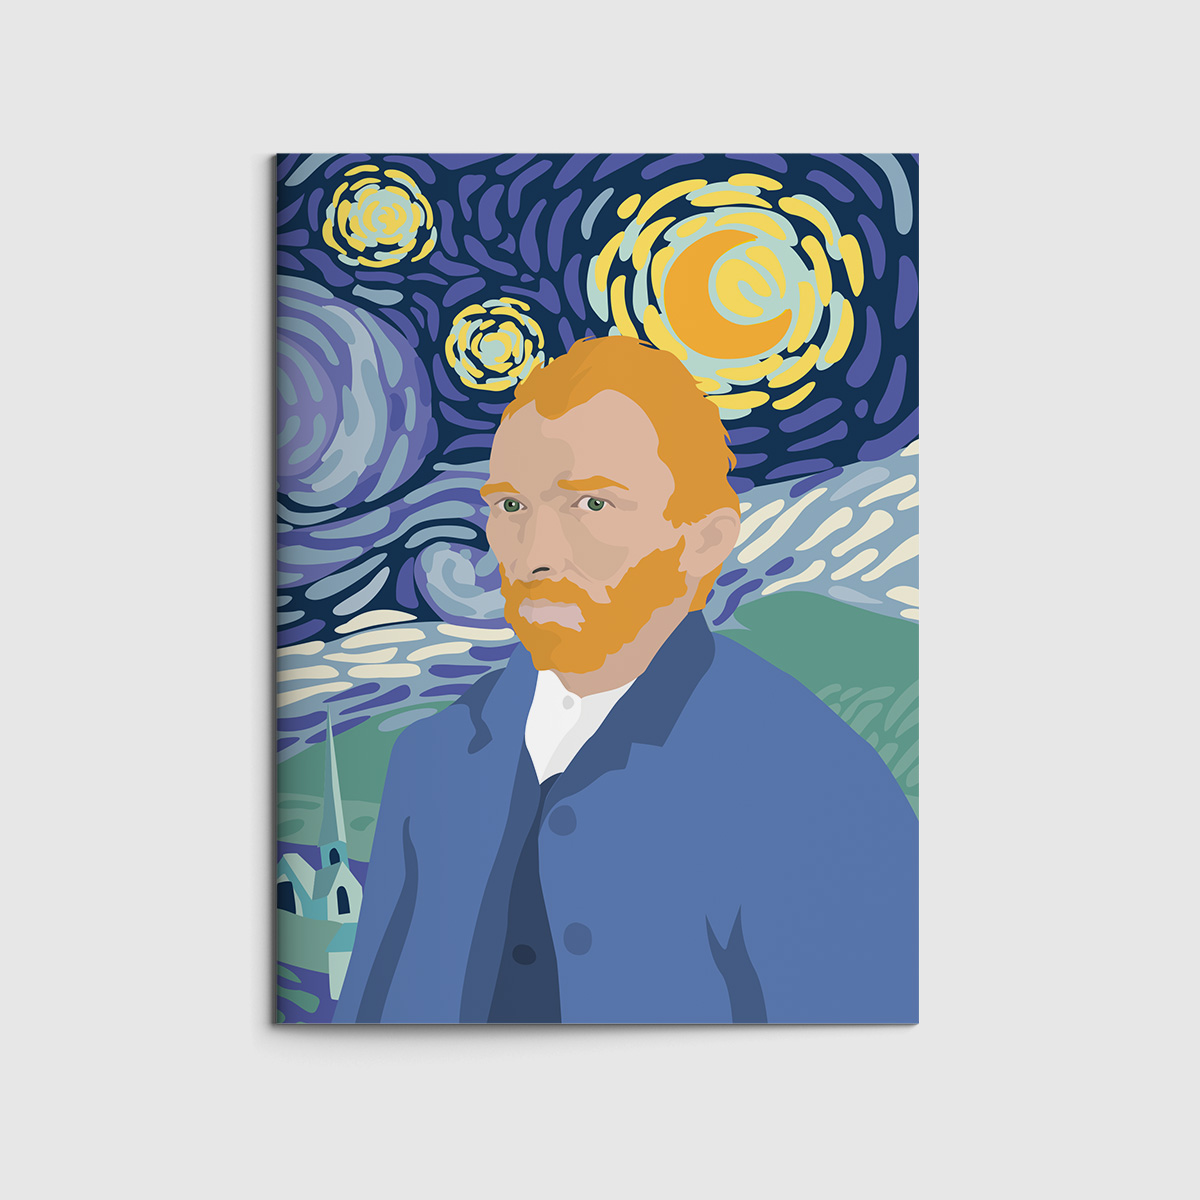 Heft A6 - Museum Art - starry night, van Gogh